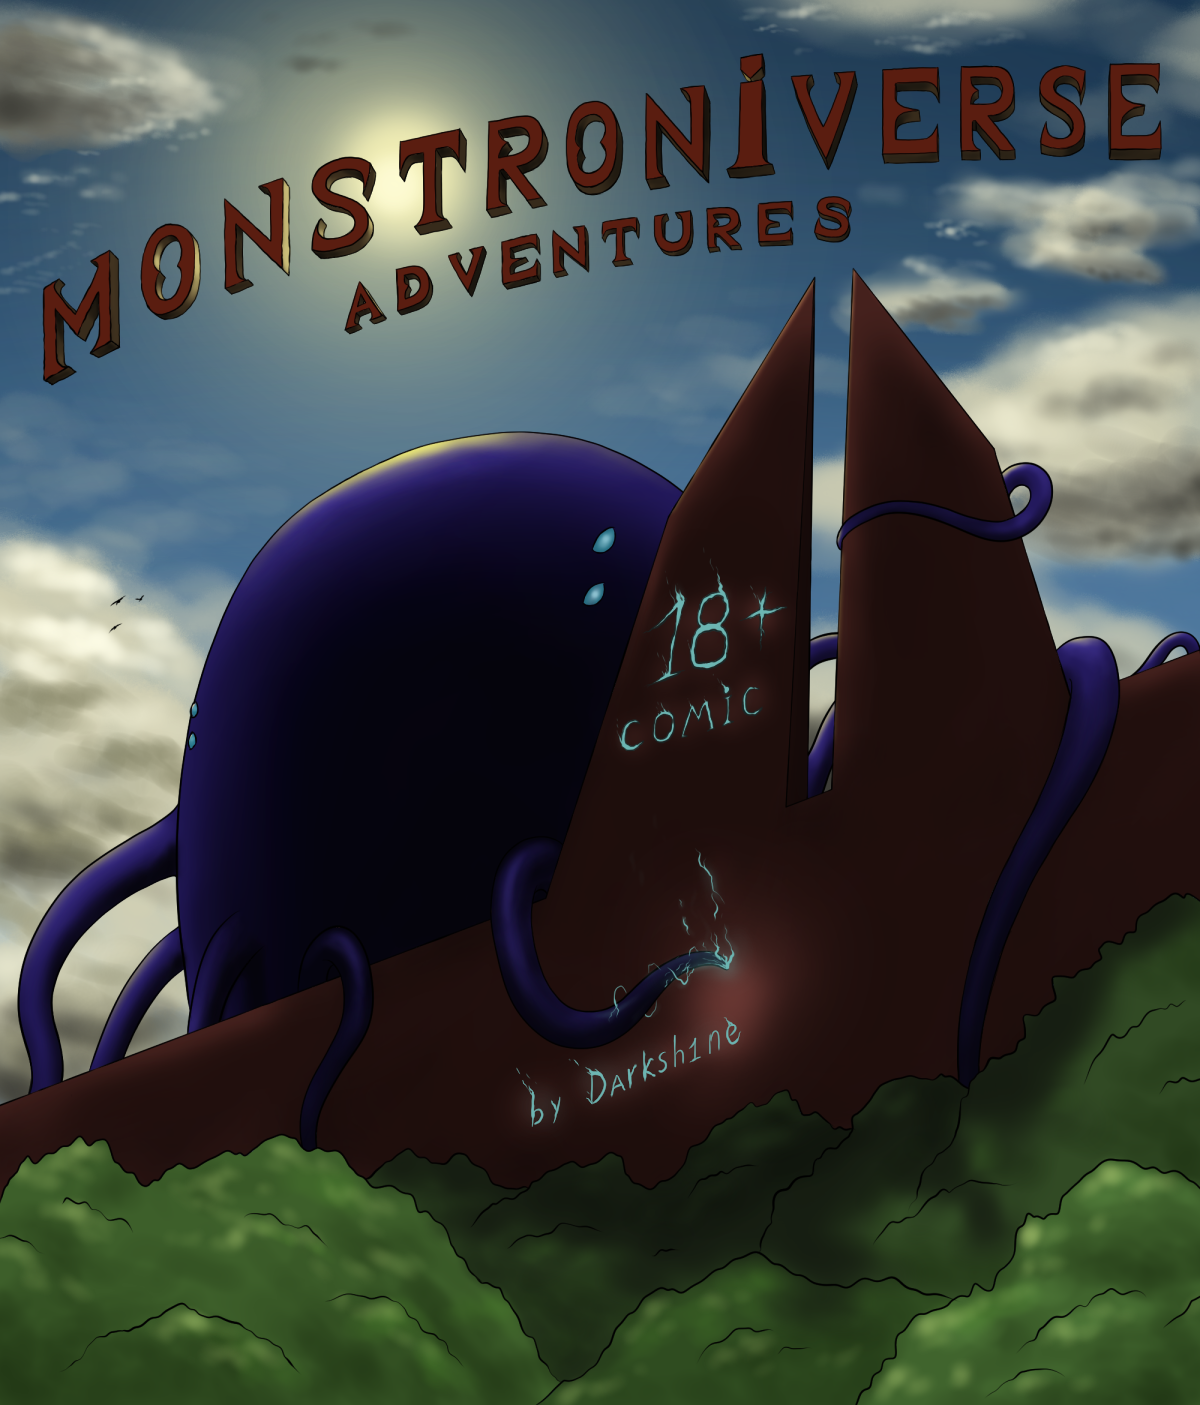 Monstroniverse adventures